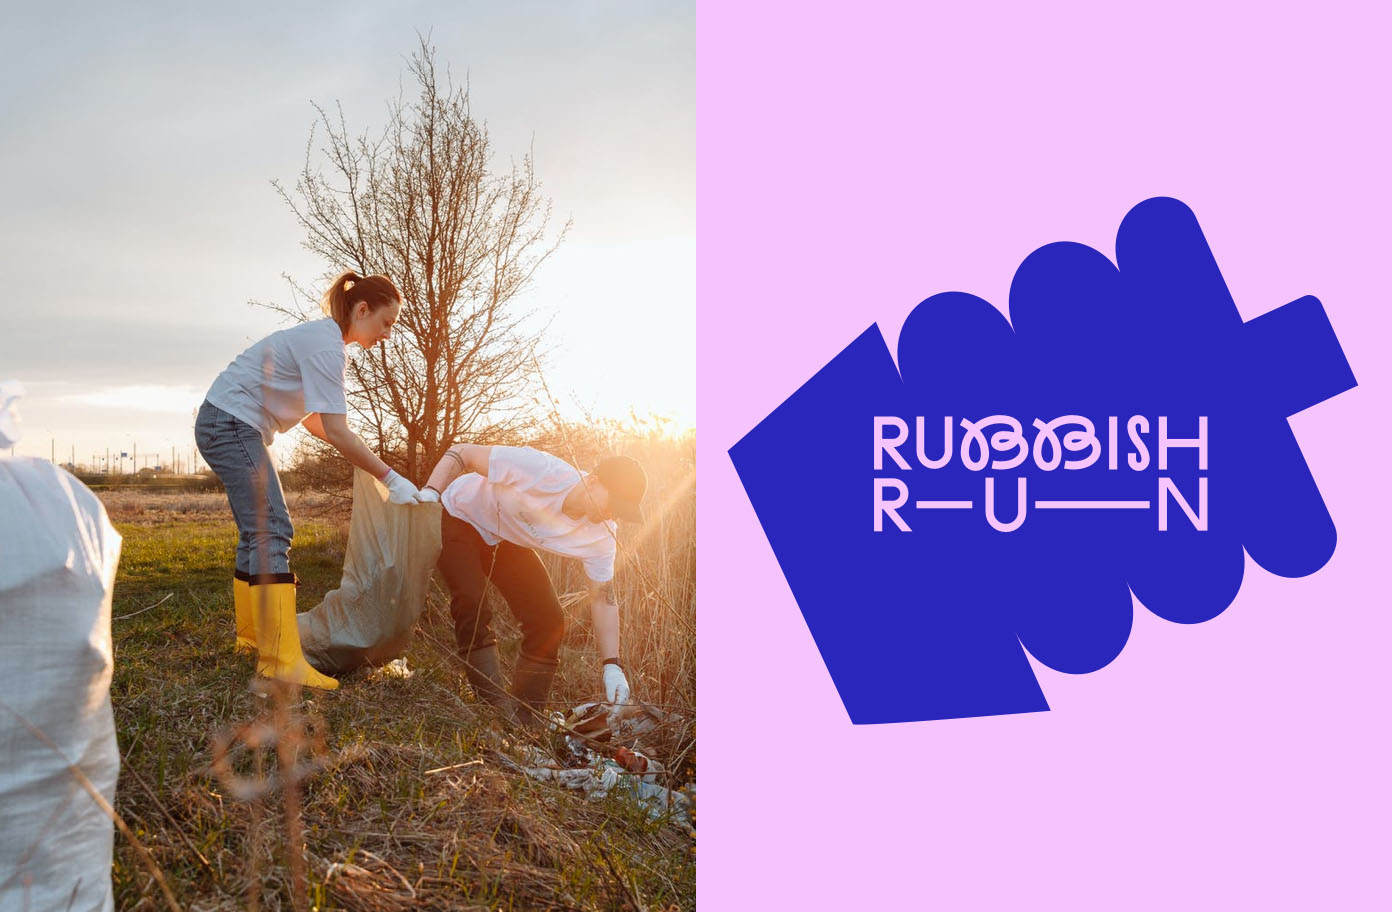 Brand image and logo – Rubbish Run